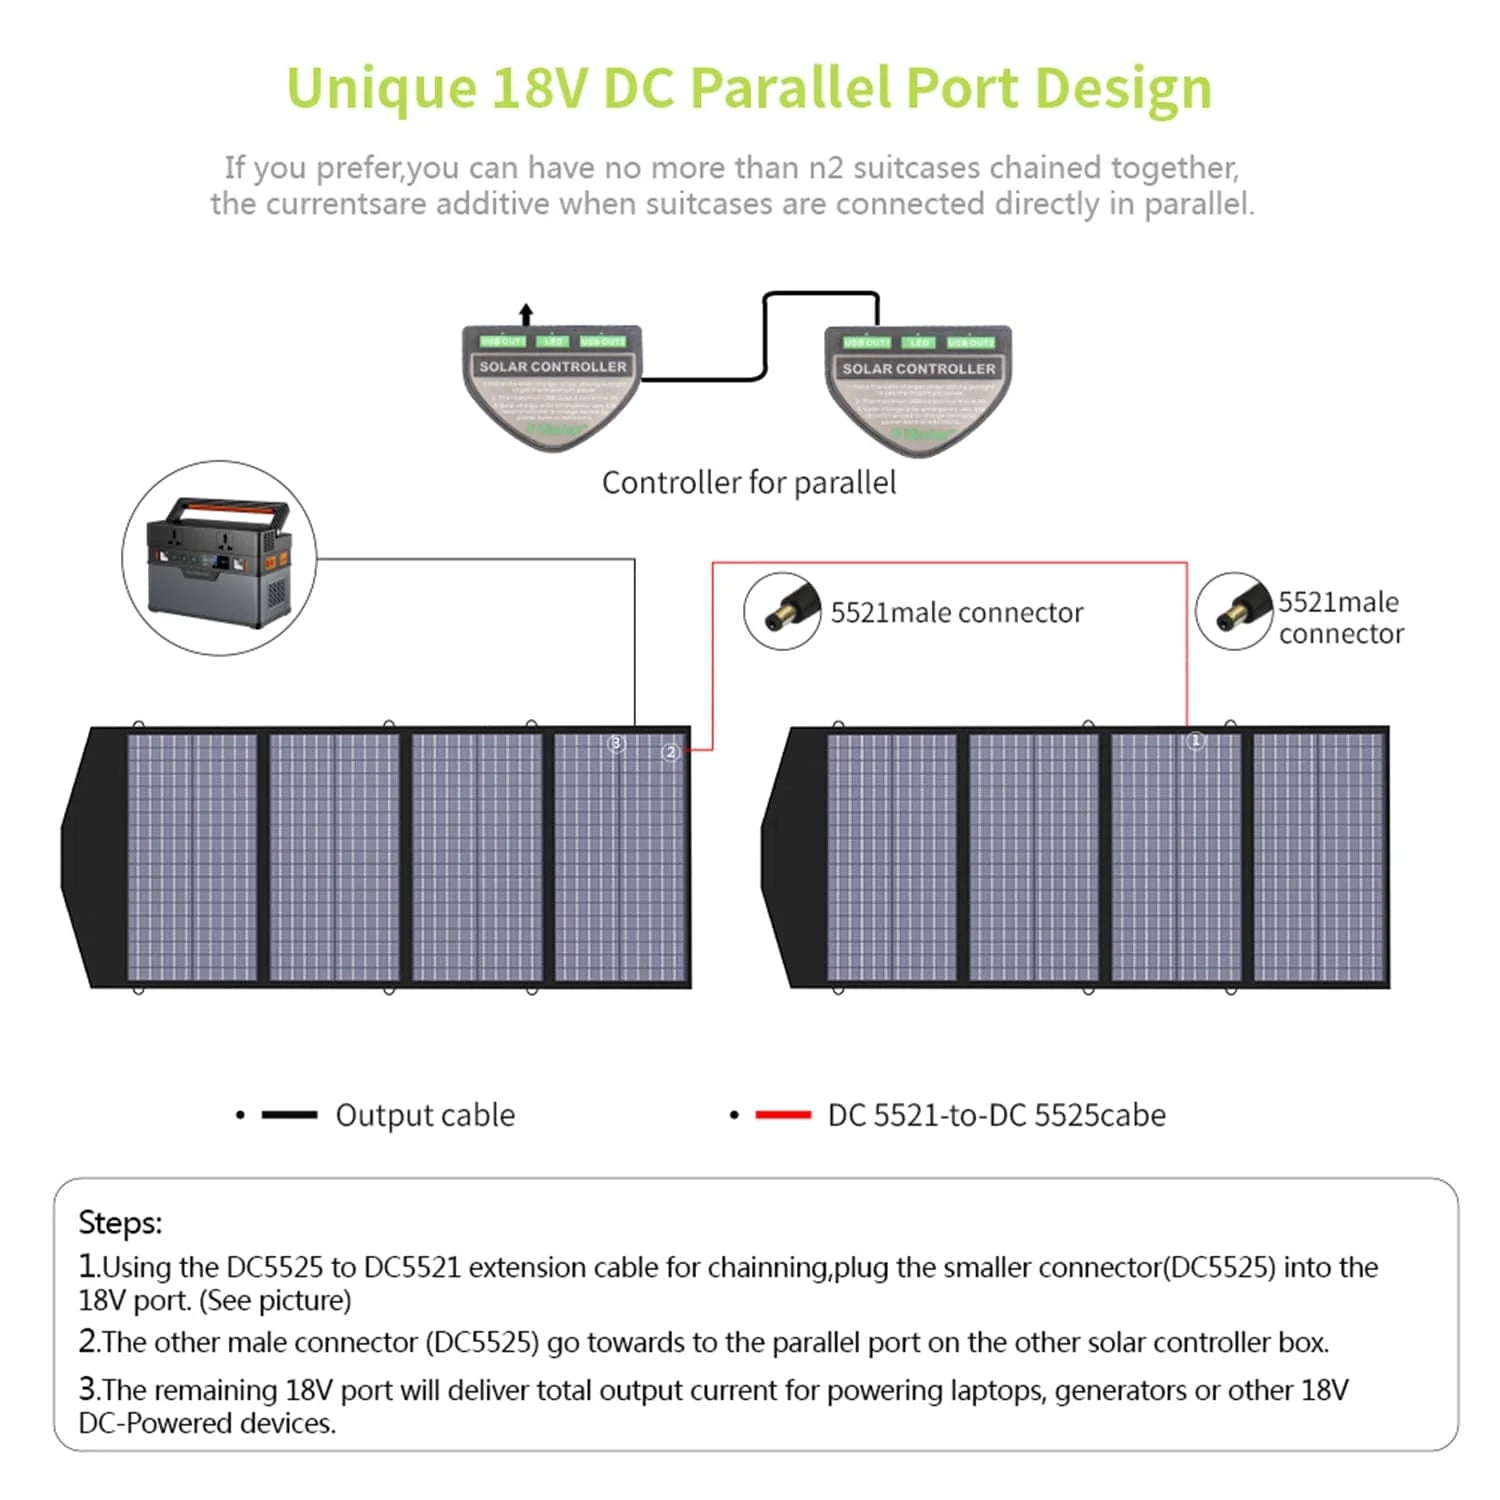 ALLPOWERS SP029 Portable Polycrystalline Solar Panel 140W